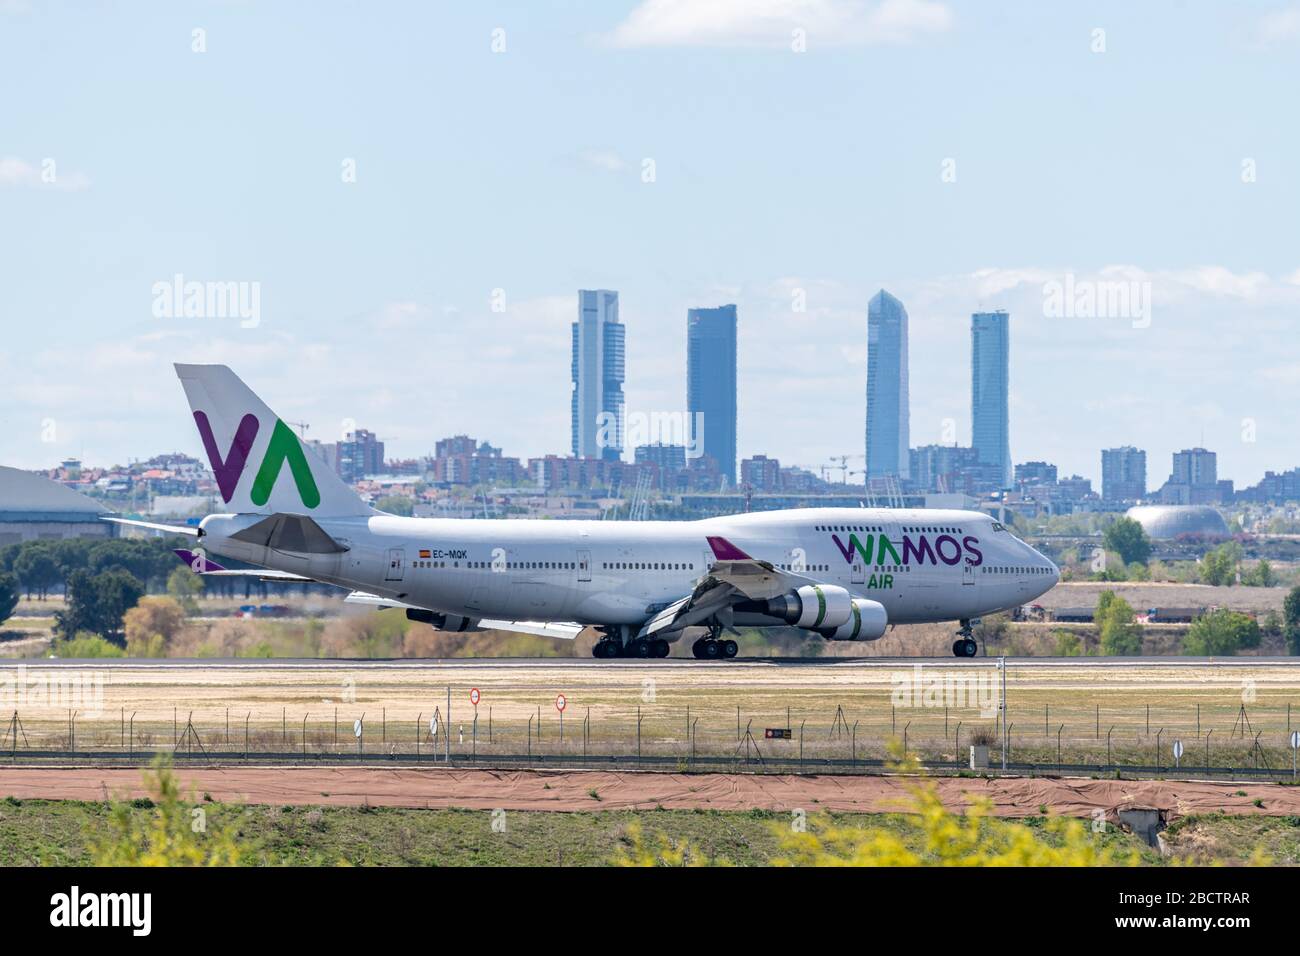 MADRID, SPAIN - APRIL 14, 2019: VAMOS Airlines Boeing 747 passenger plane landing at Madrid-Barajas International Airport Adolfo Suarez In the backgro Stock Photo